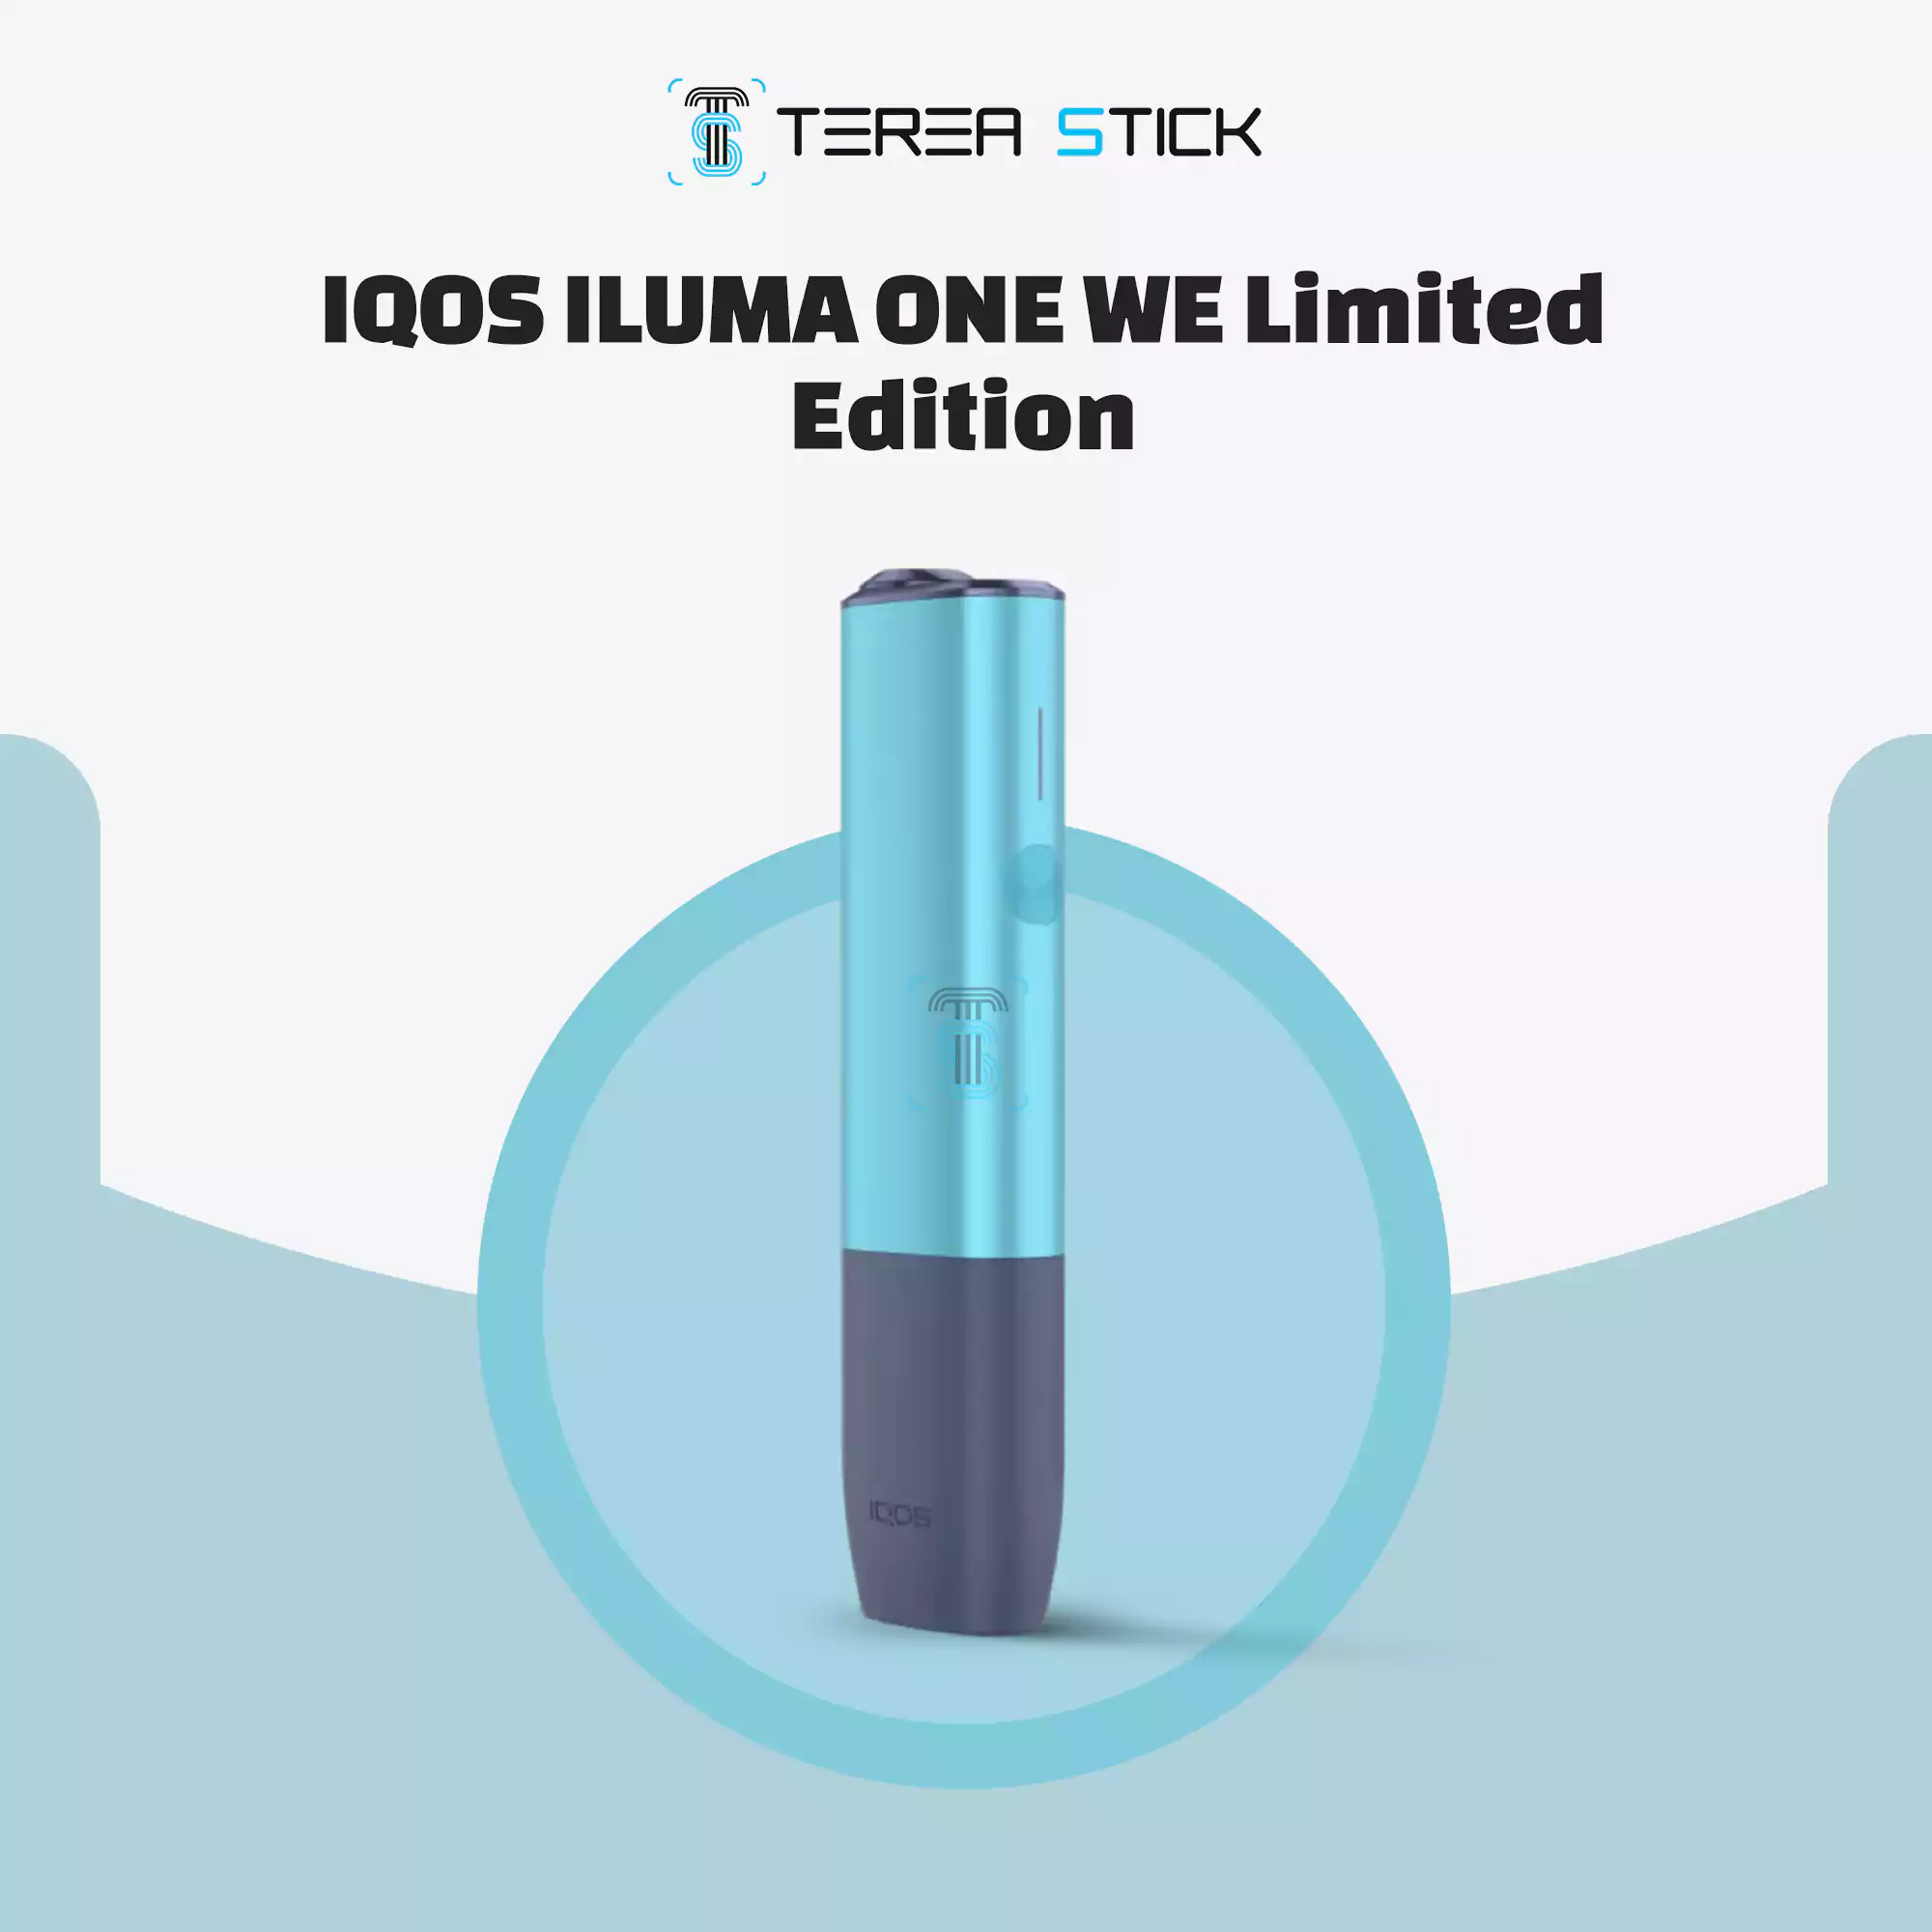 Iqos Iluma One We Limited Edition In UAE